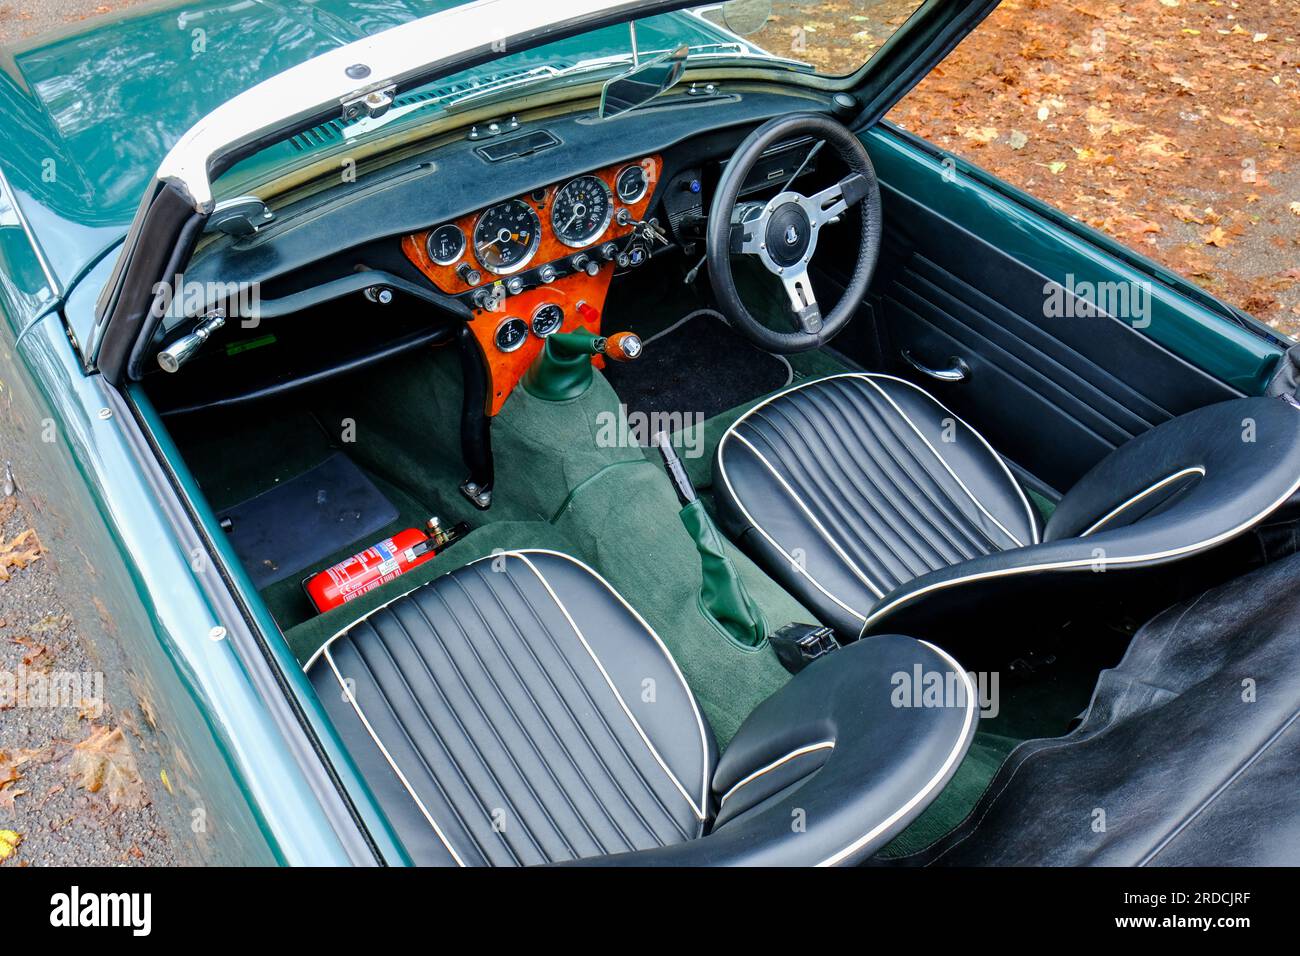 1967 Triumph Spitfire classic British sports car Stock Photo